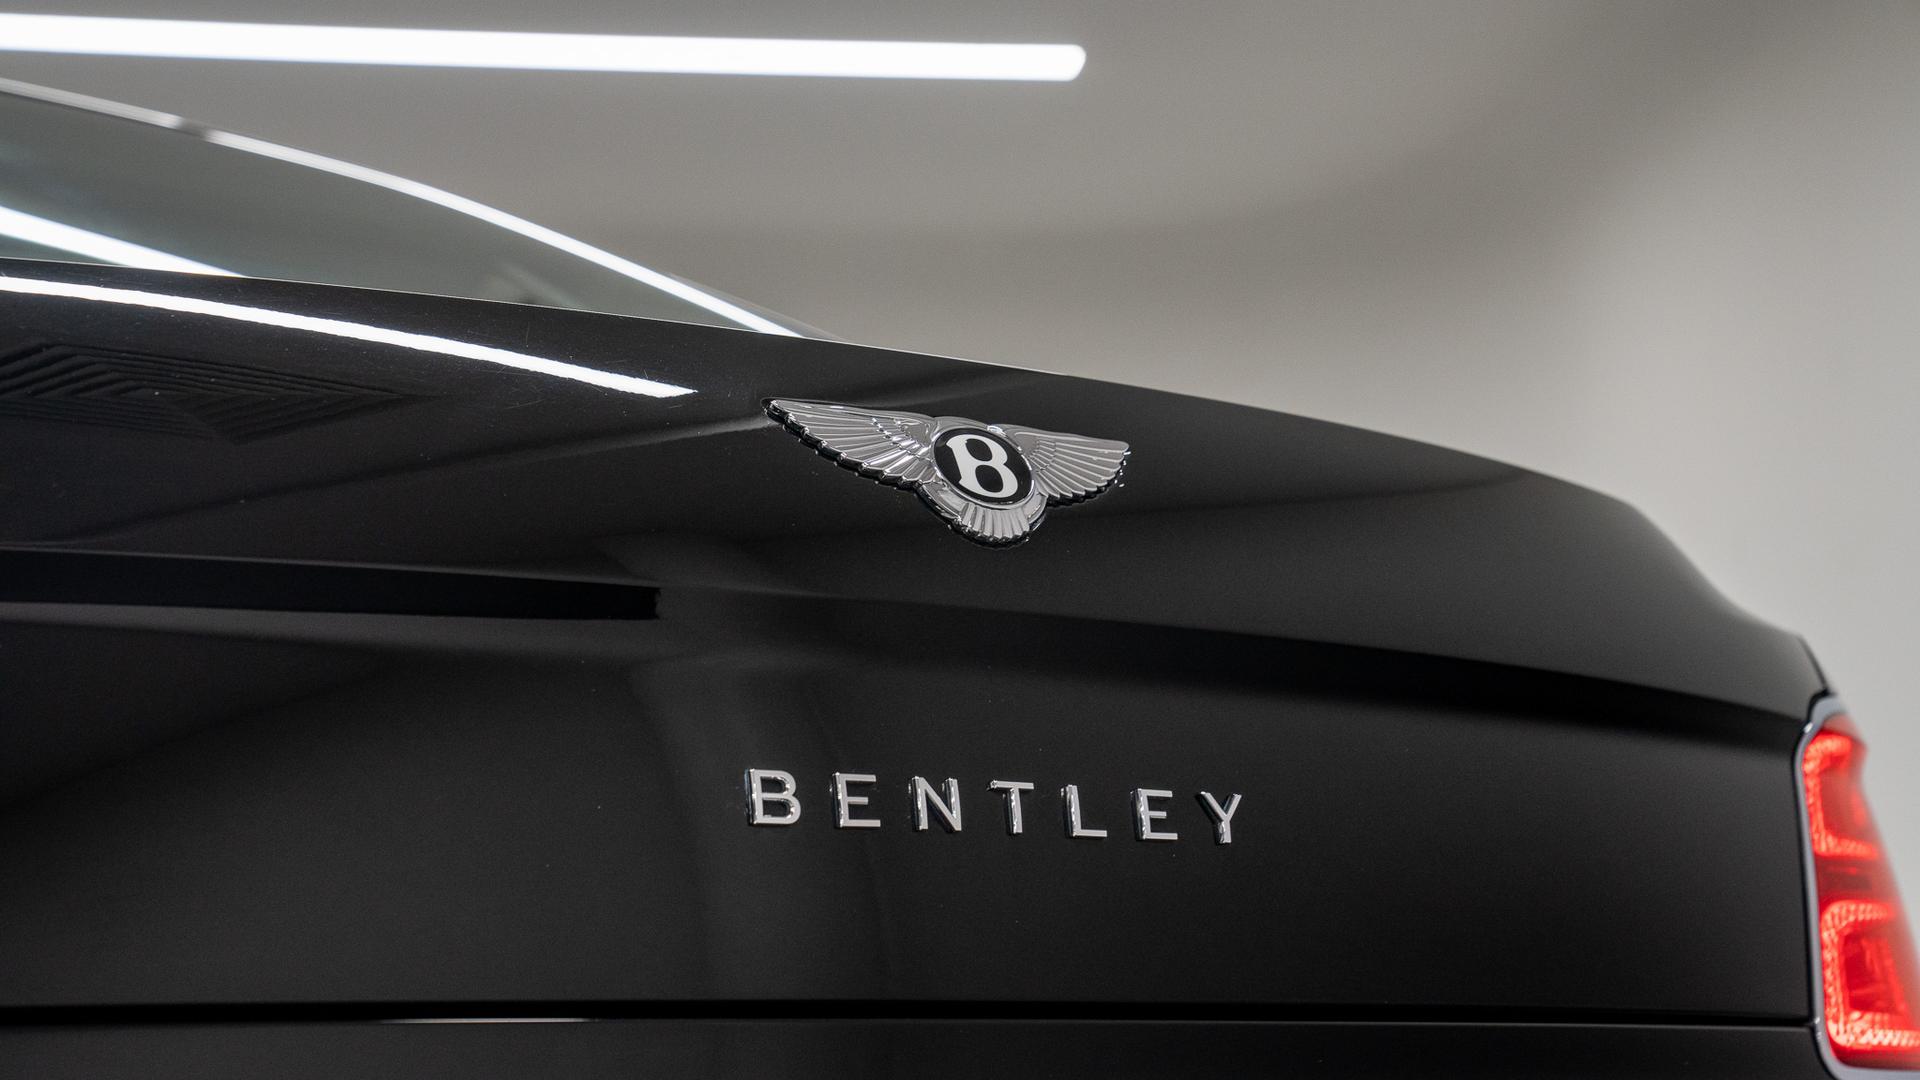 Bentley Continental Flying Spur Photo b119a0bc-eb33-4216-9919-8e2ffd88d7d3.jpg